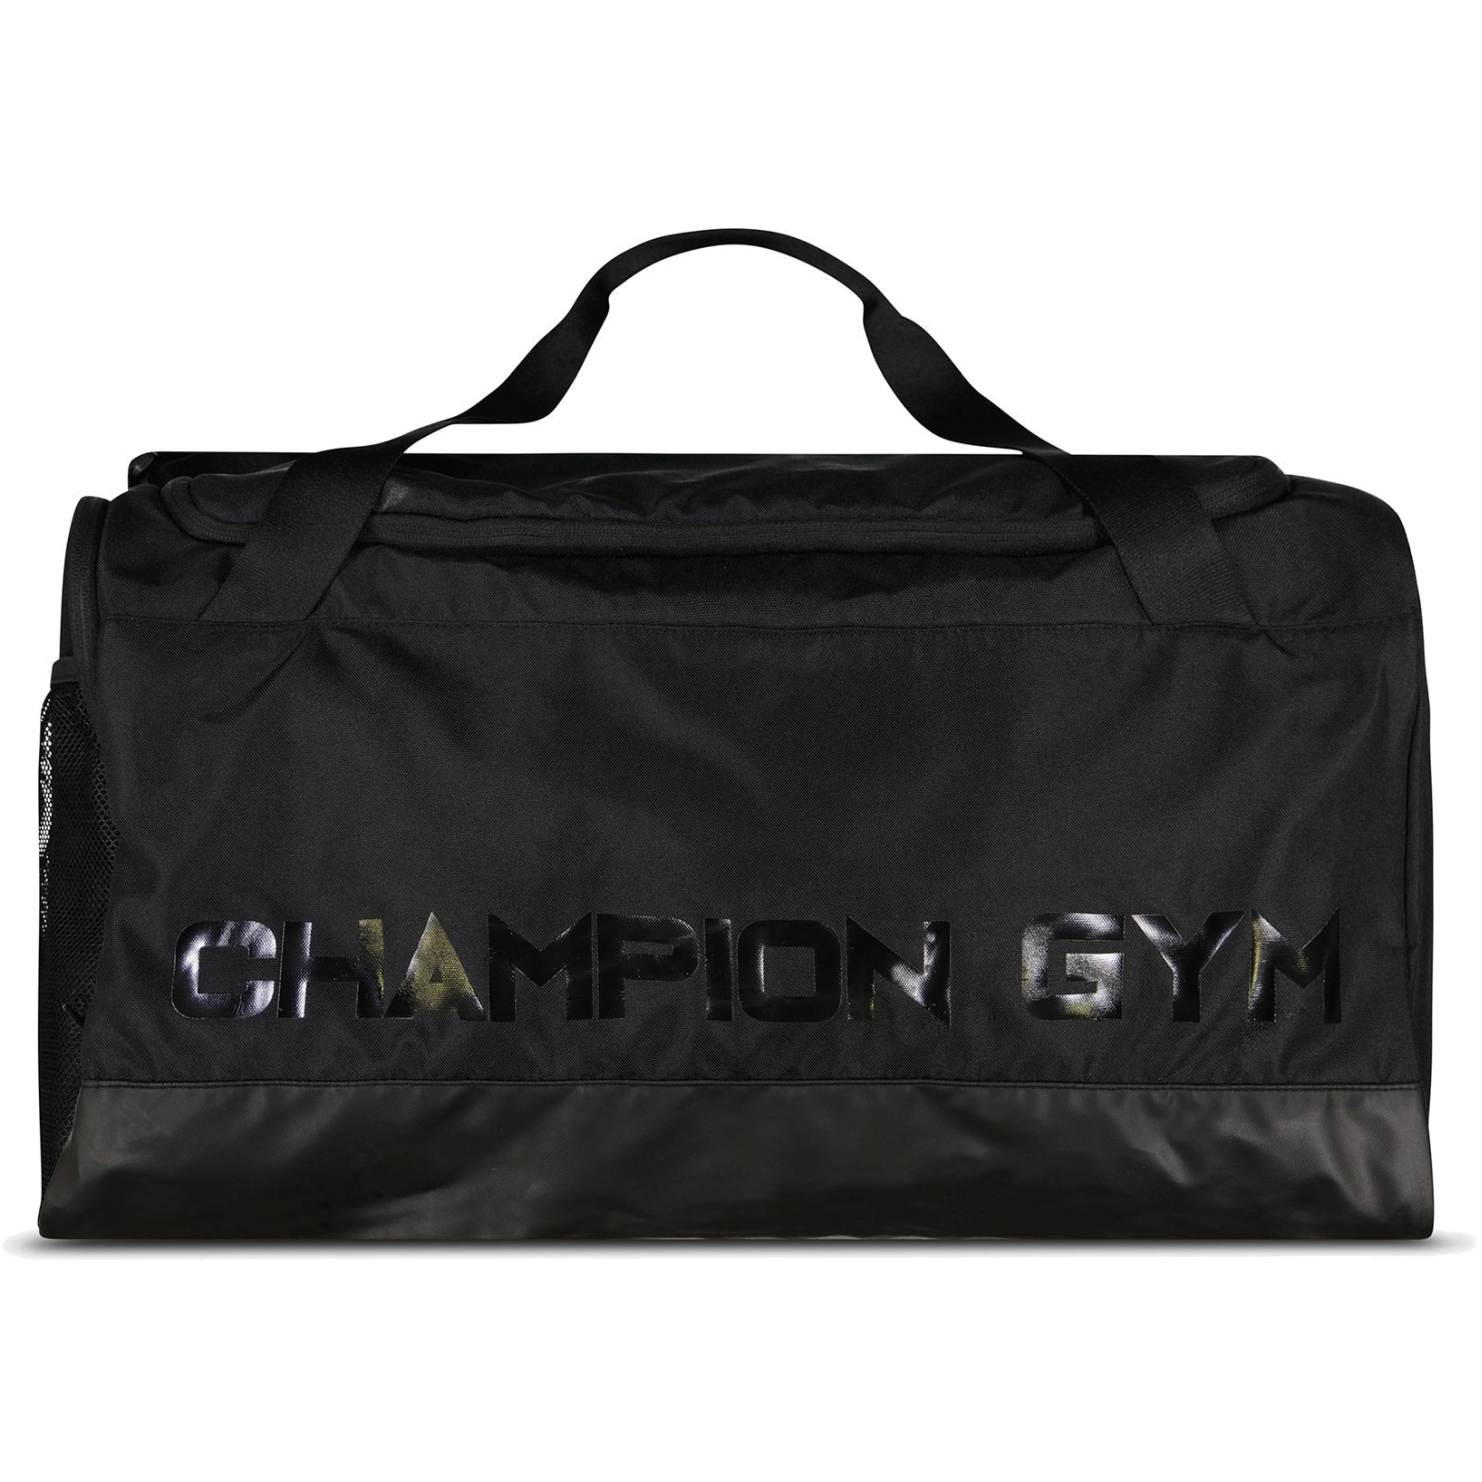 Productfoto van Champion Legacy Medium Duffle 805604 - black